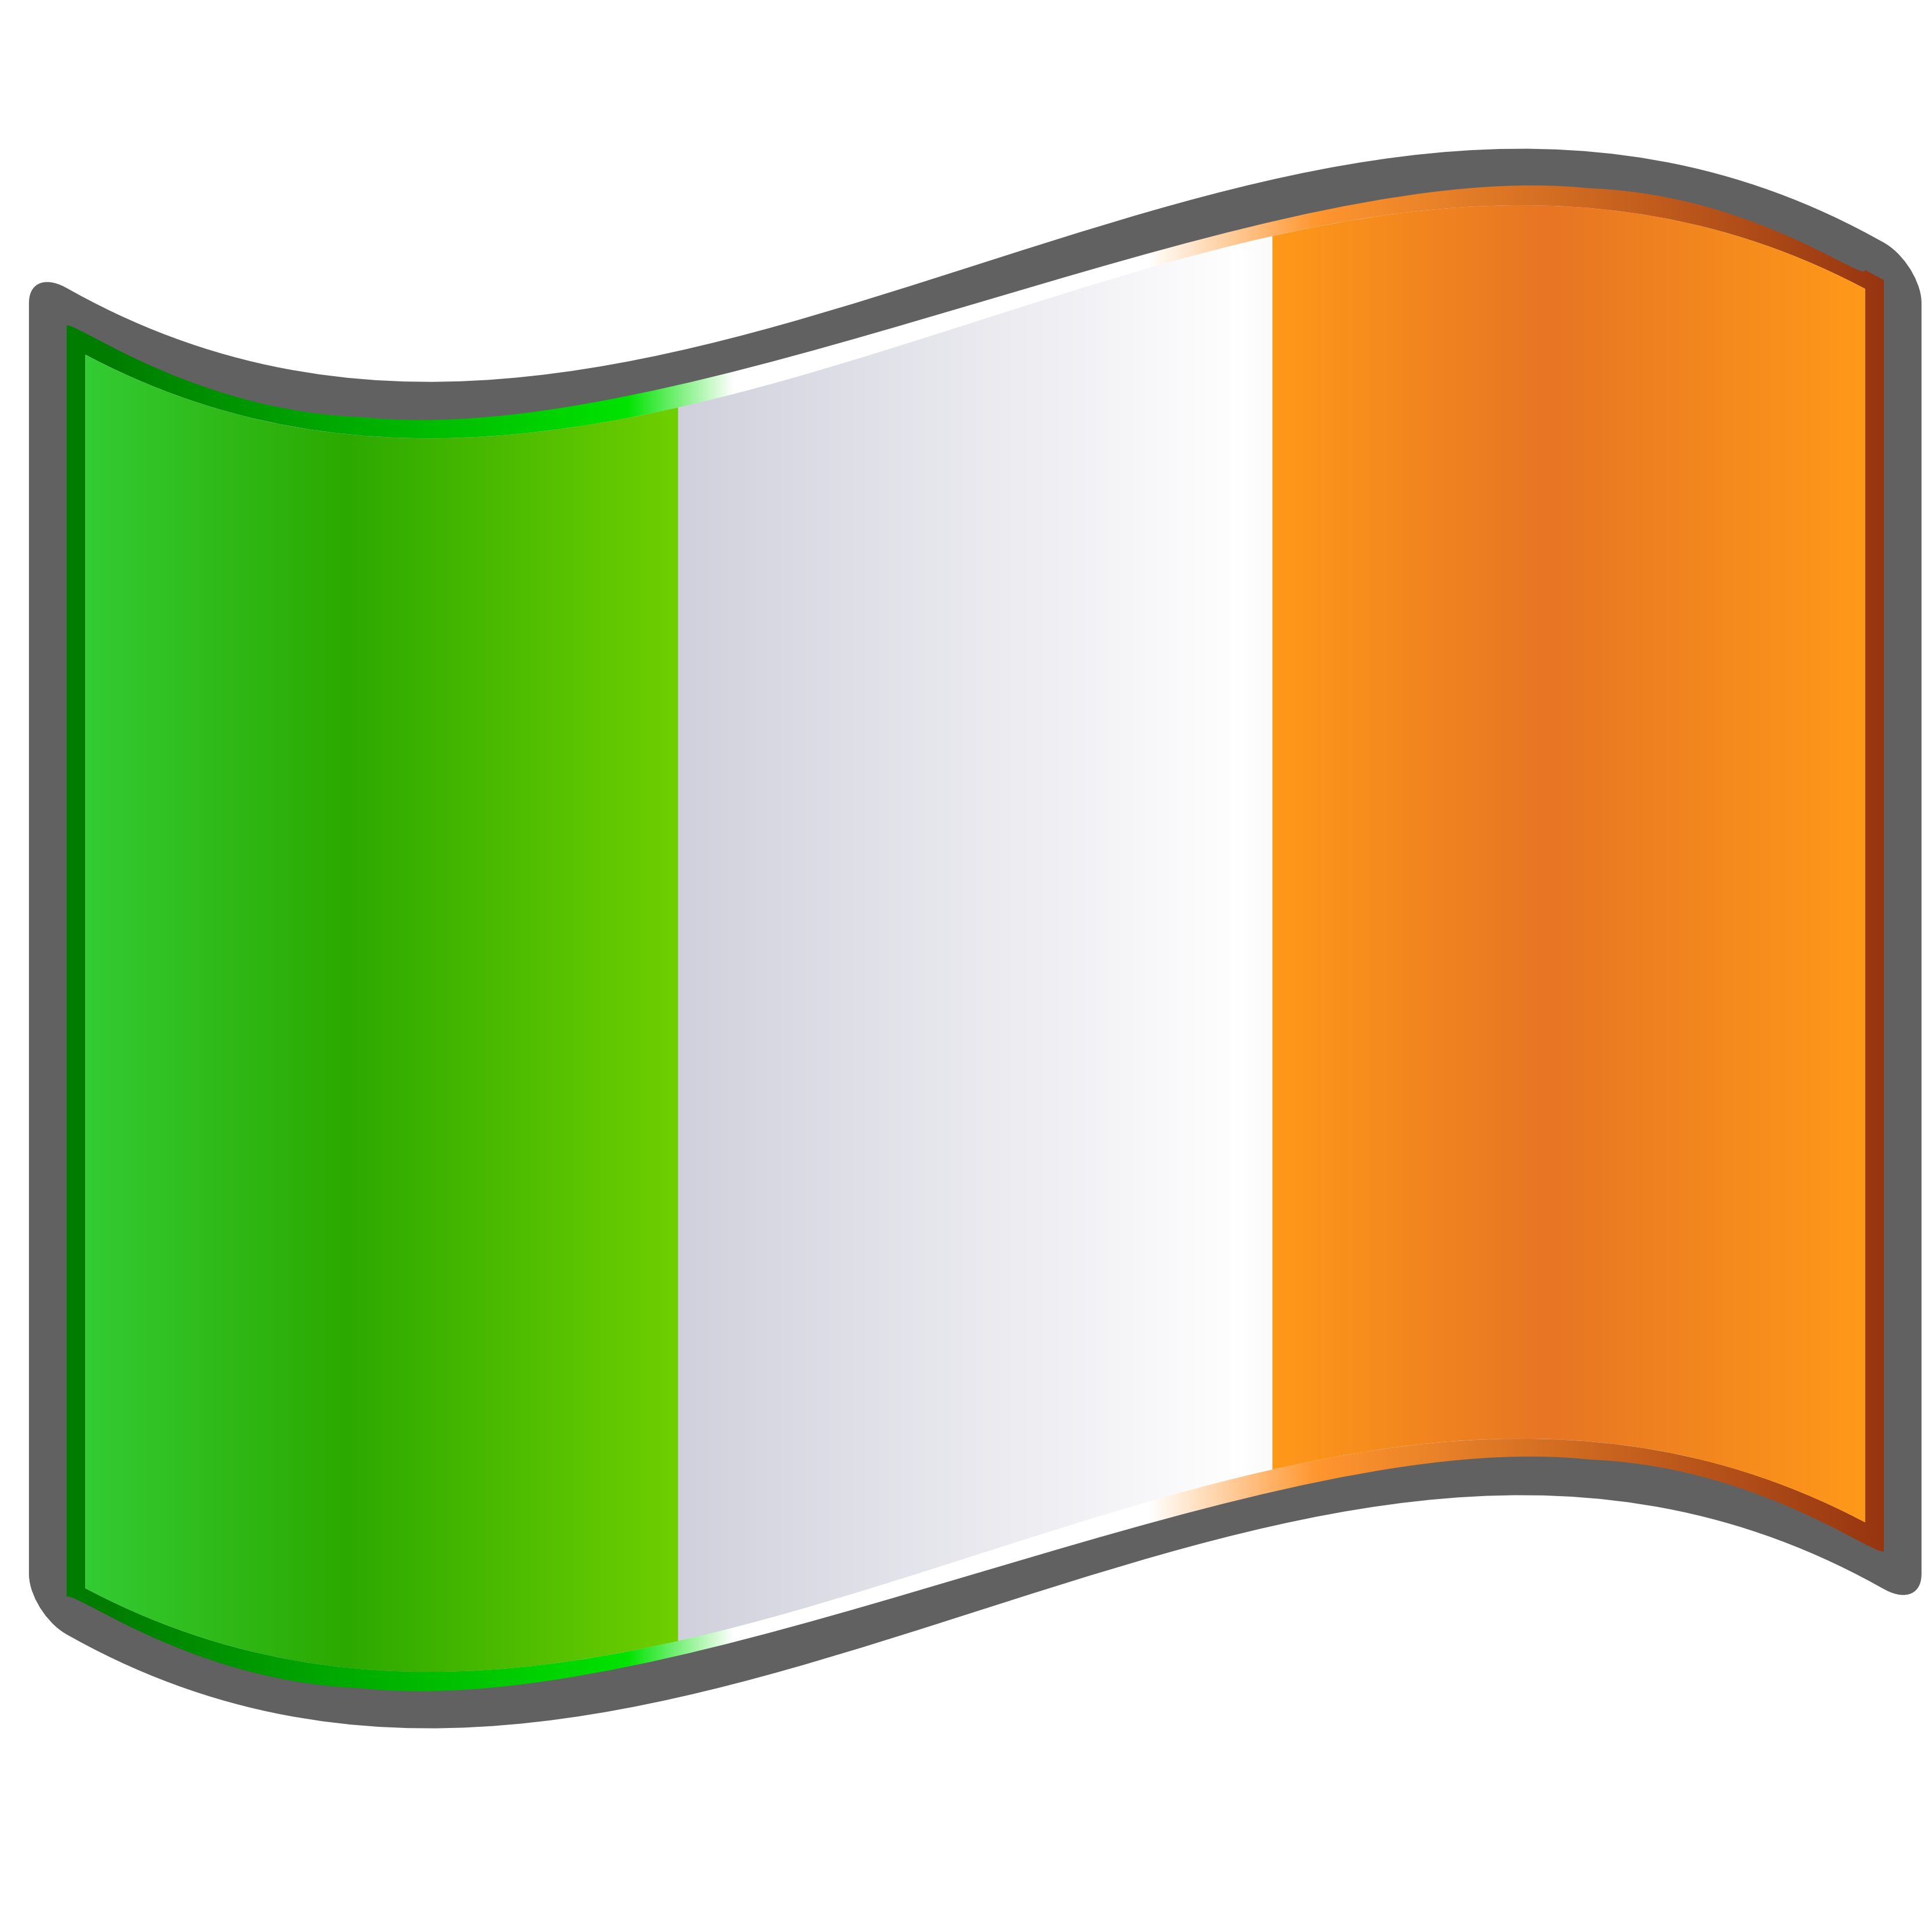 Ireland flag. Флаг Ирландии Картун. Флаг the Republic of Ireland. Флаг Ириш. Ирландский флаг.